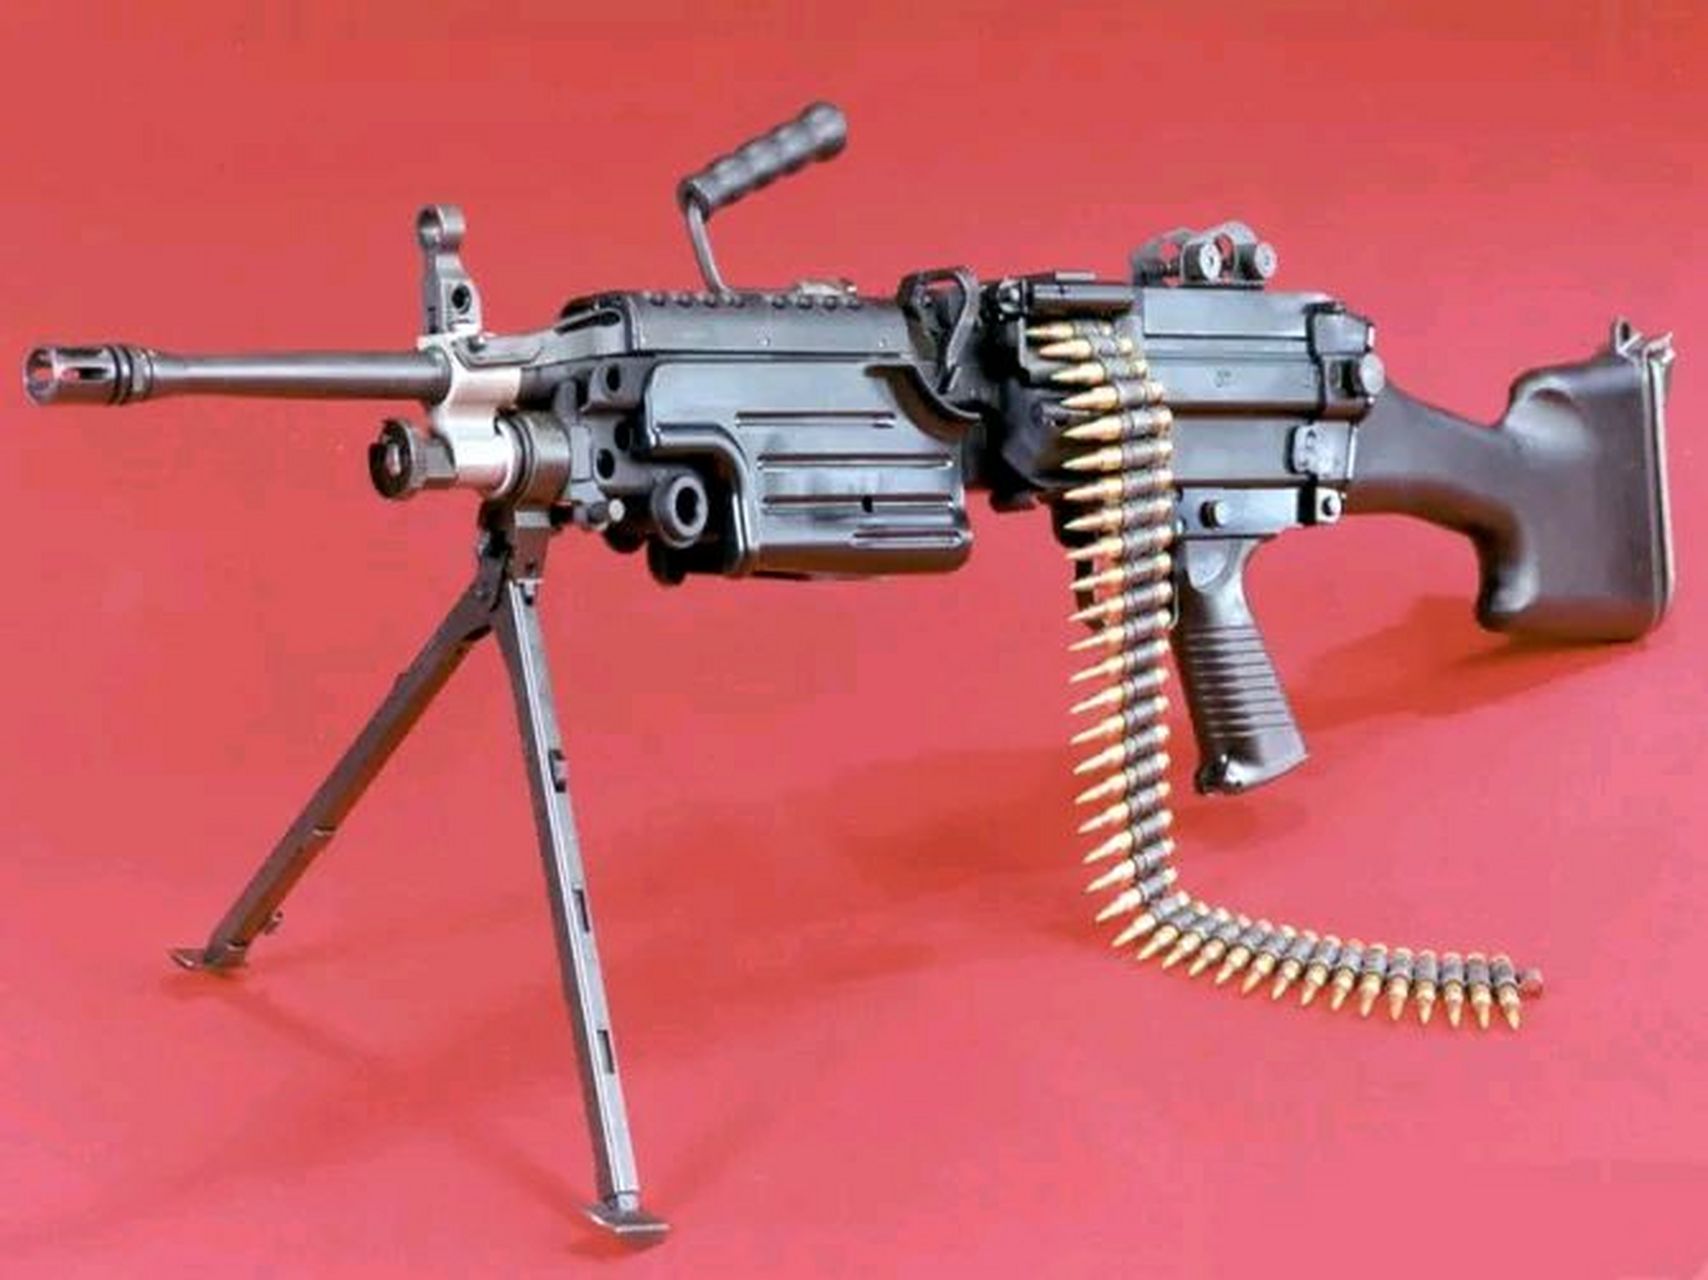 FN机枪图片